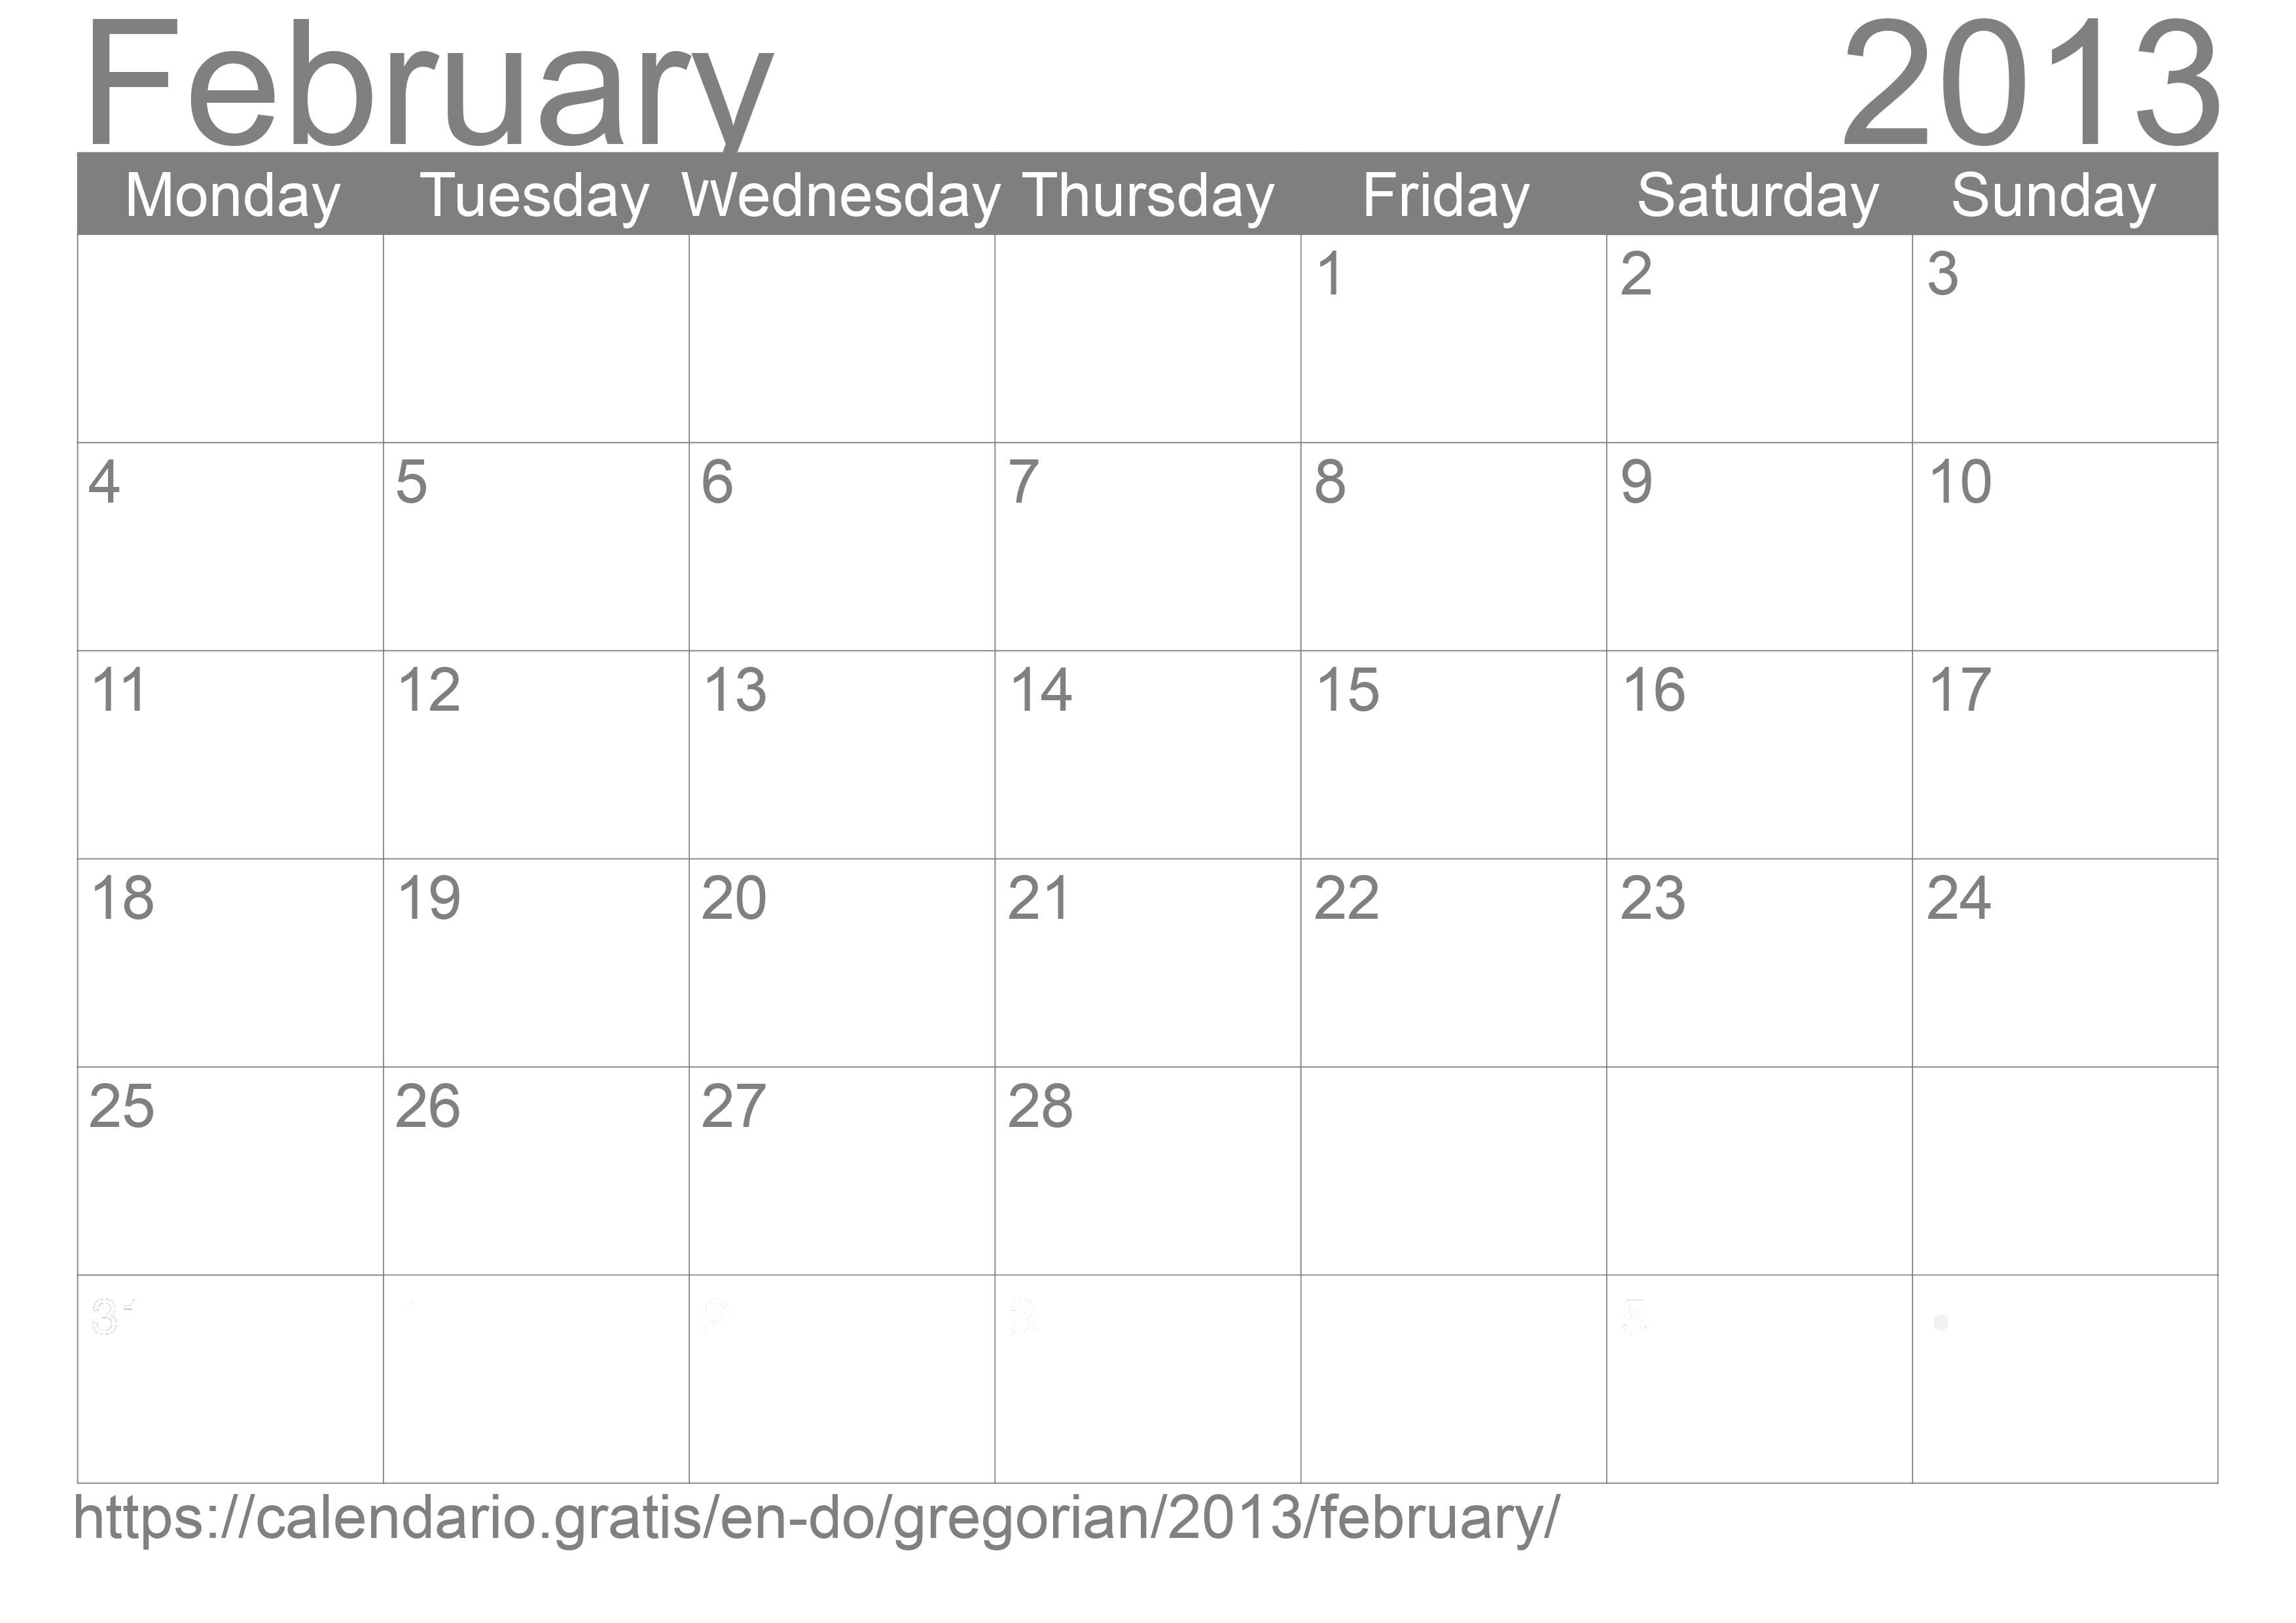 Calendar February 2013 to print